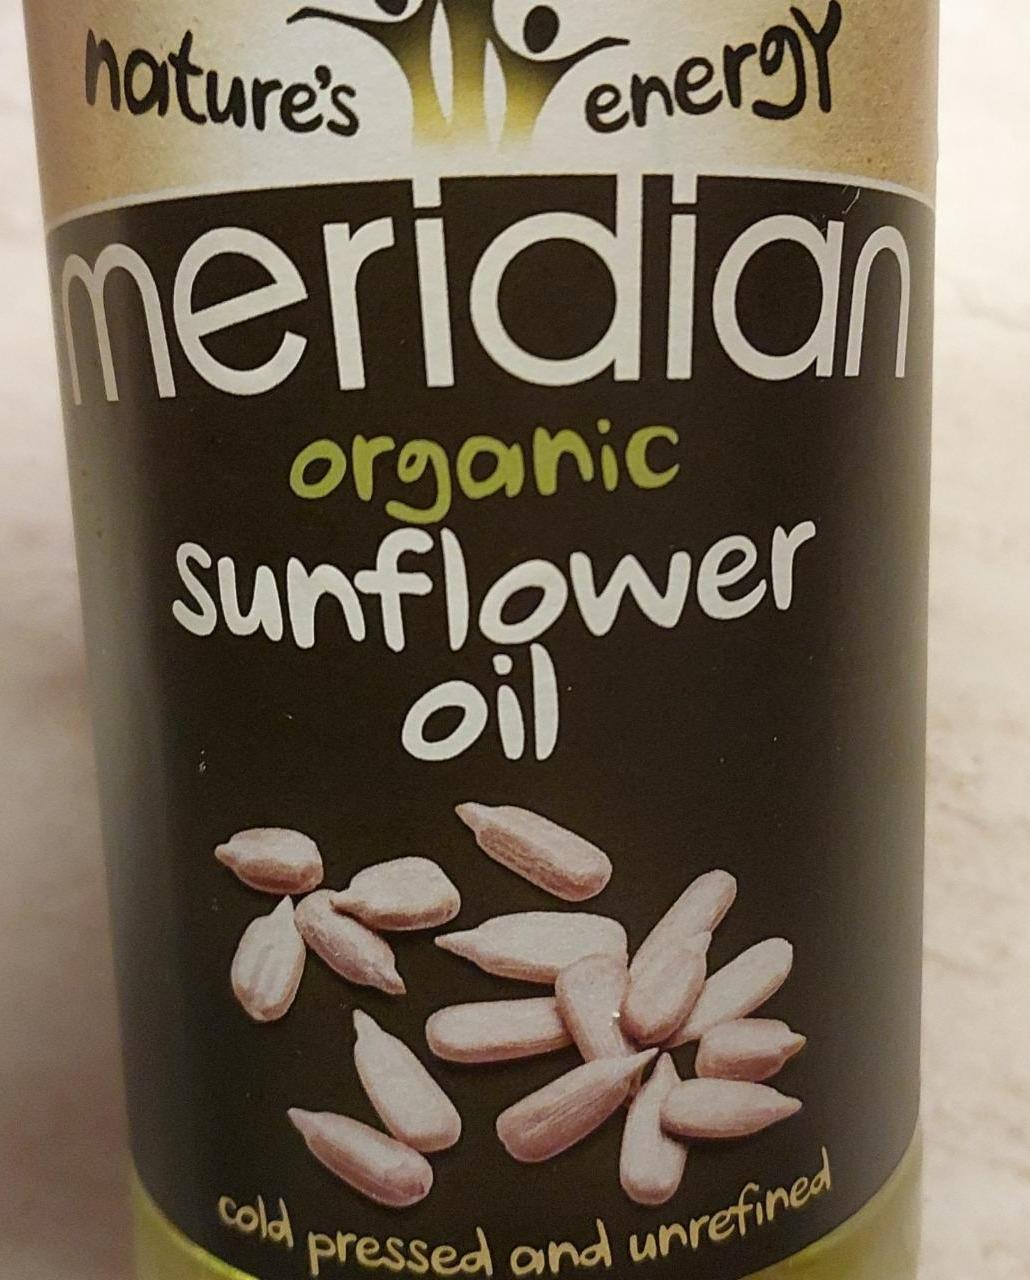 Fotografie - Organic sunflower oil Meridian